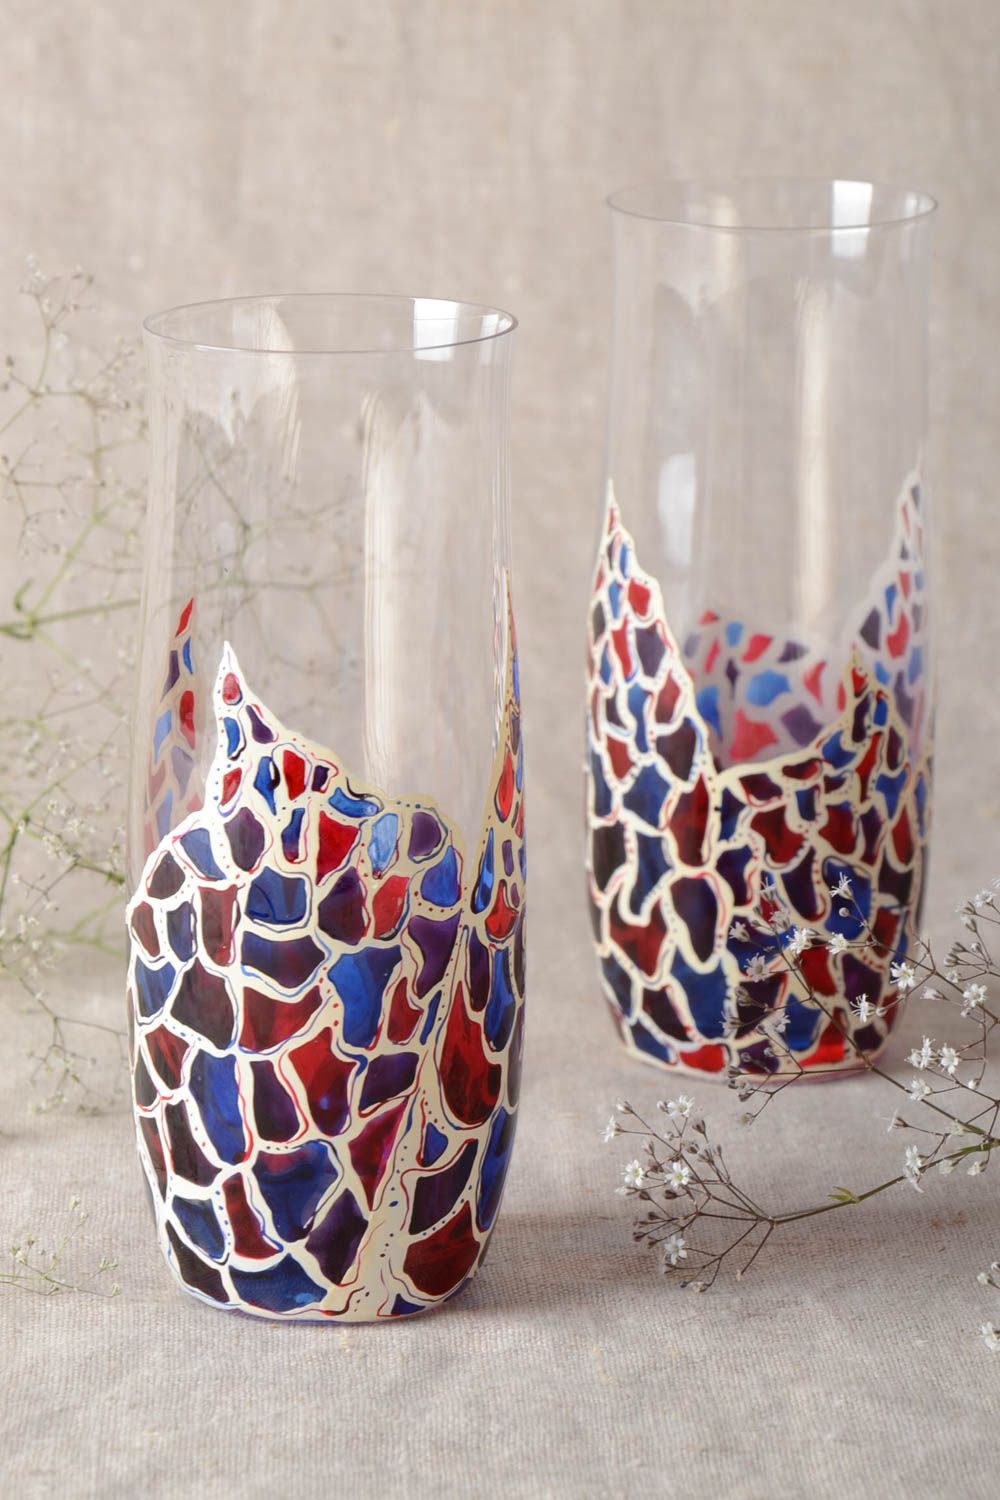 Handmade drinking glasses 2 colored wine glasses 400 ml housewarming gift ideas photo 1